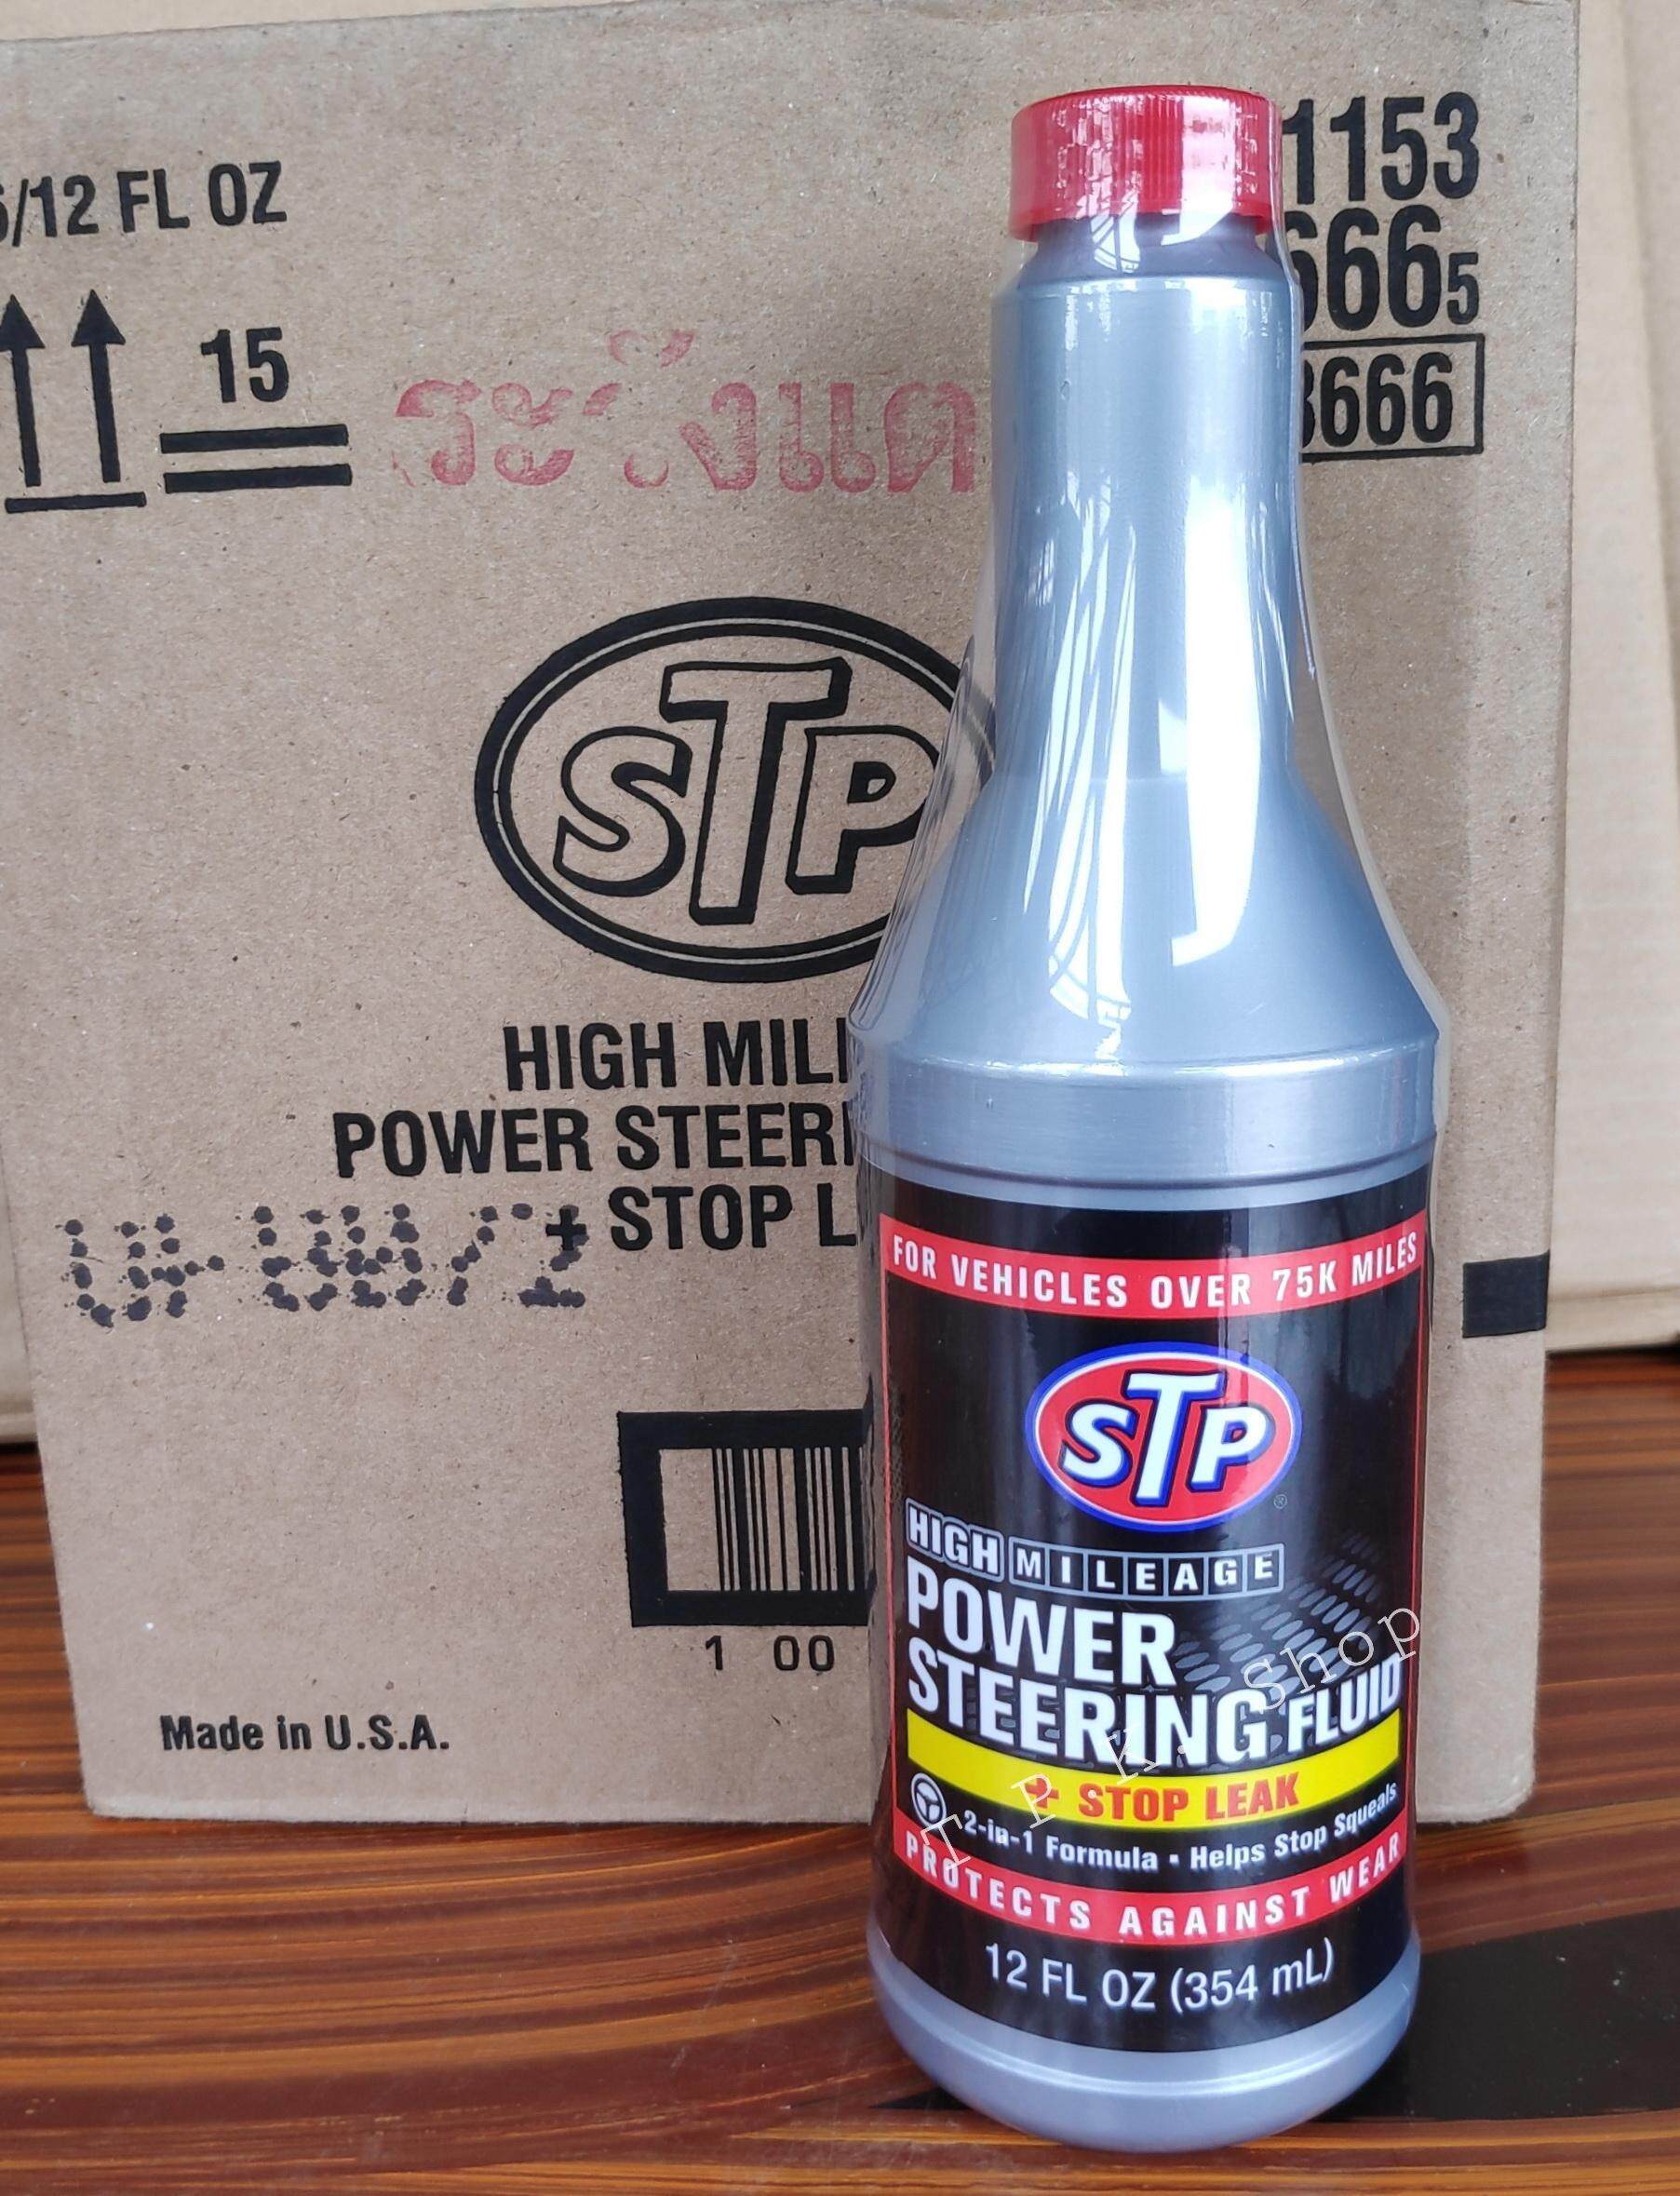 STP น้ำมันพาวเวอร์สูตรหยุดการรั่วซึม POWER STEERING FLUID STOP LEAK ปริมาณ 354 ml. ผลิตจากสหรัฐอเมริกา